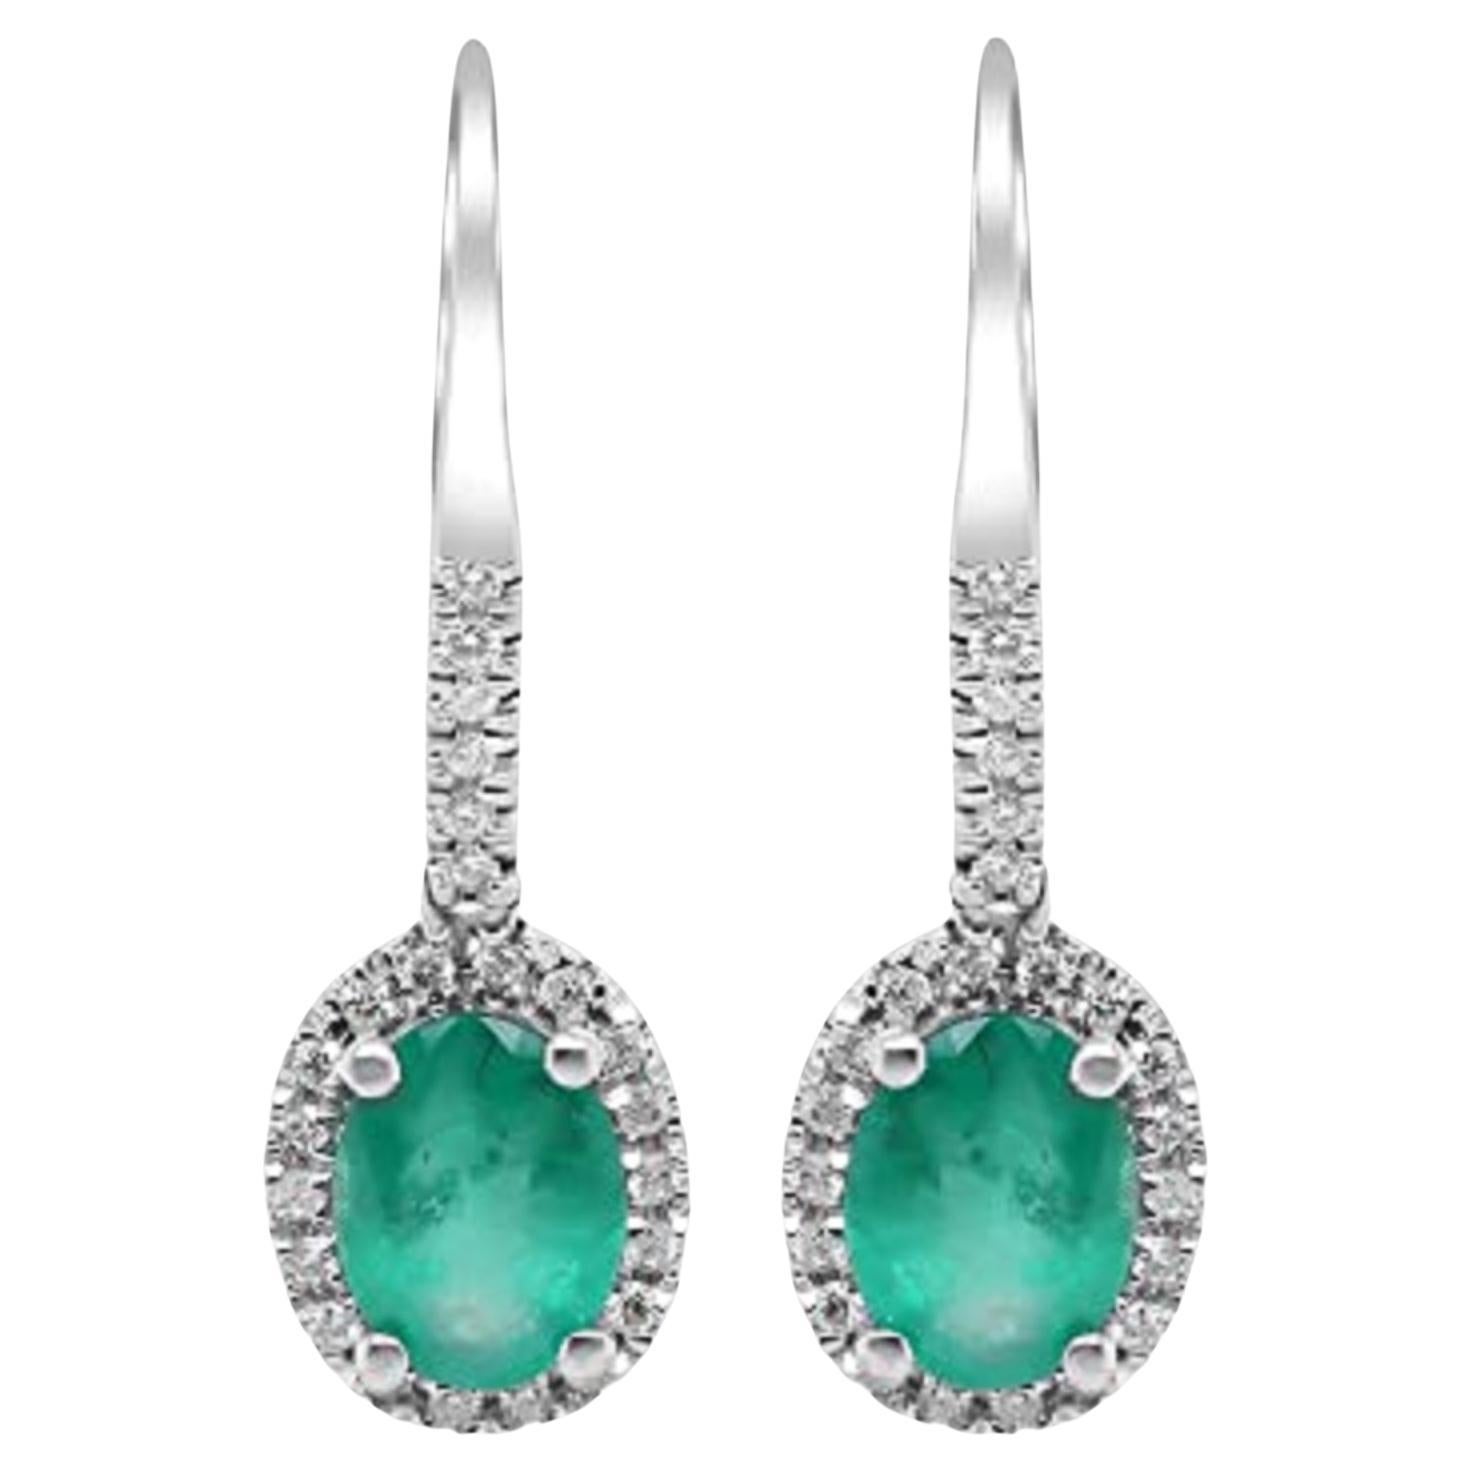 Gin & Grace14K White Gold Zambian Emerald Earrings with Diamonds For Women For Sale